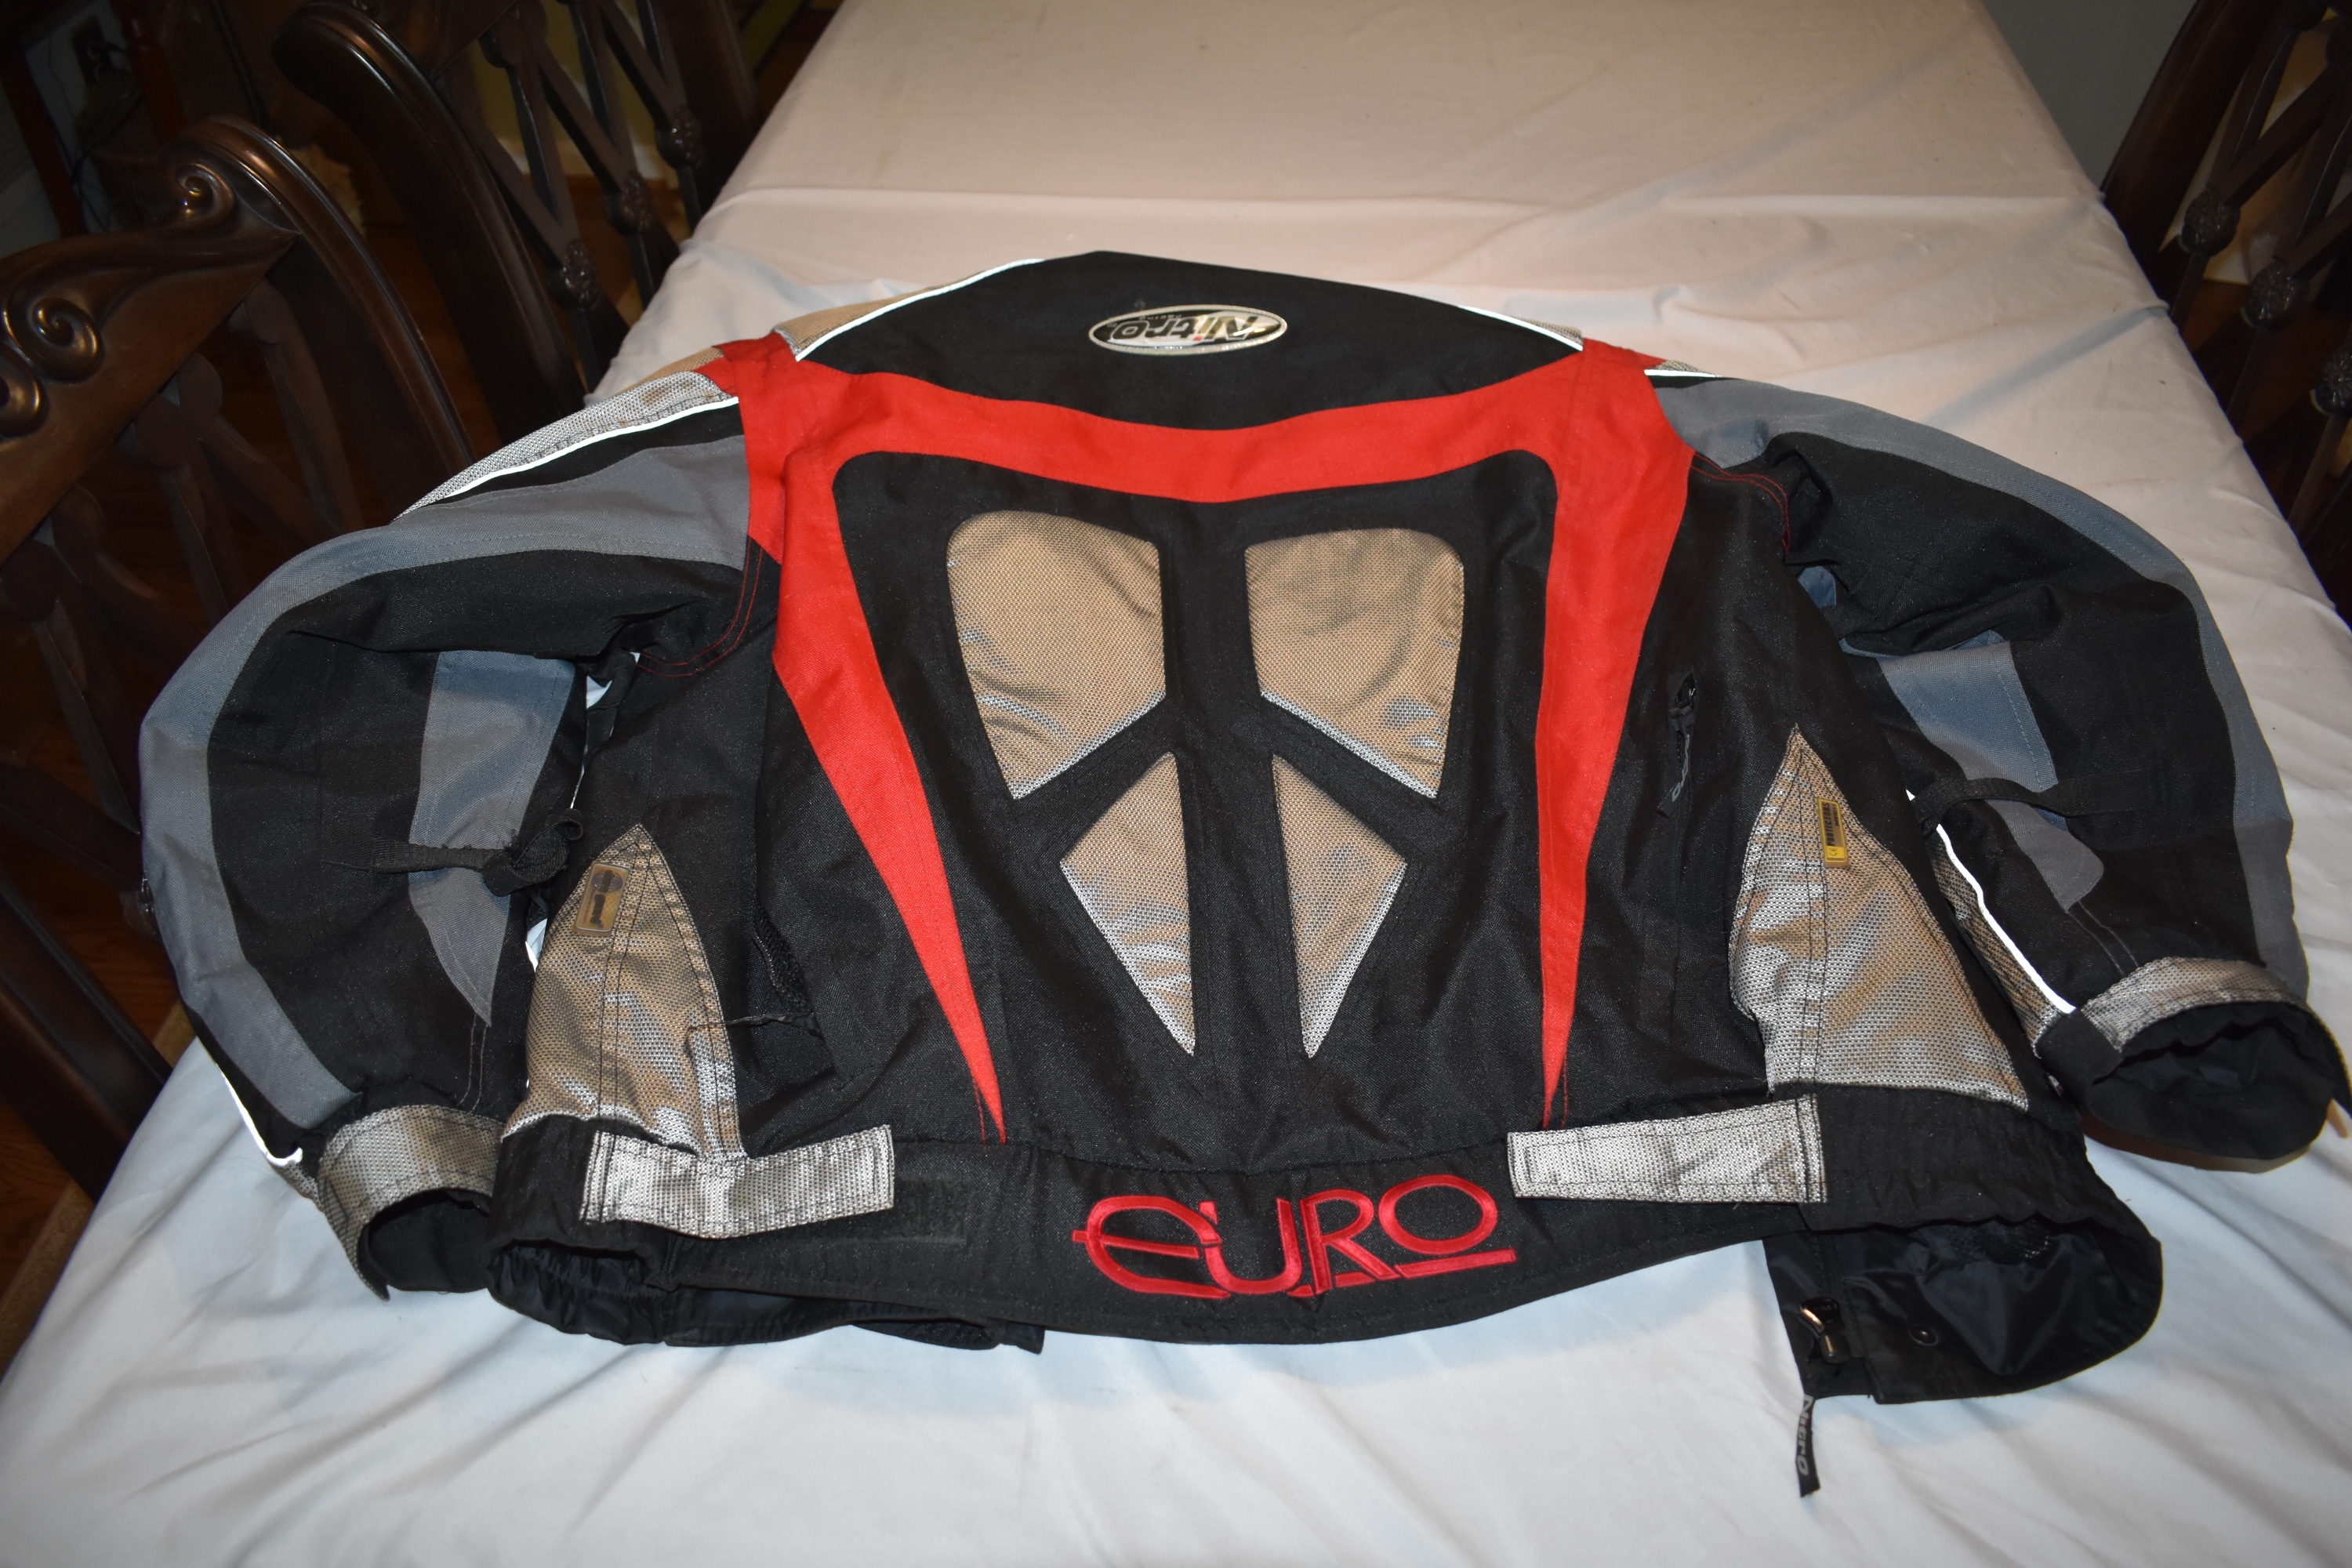 Nitro Racing Euro Jacket, Duraguard Protectors, Red/Black, Removable Liner, Large